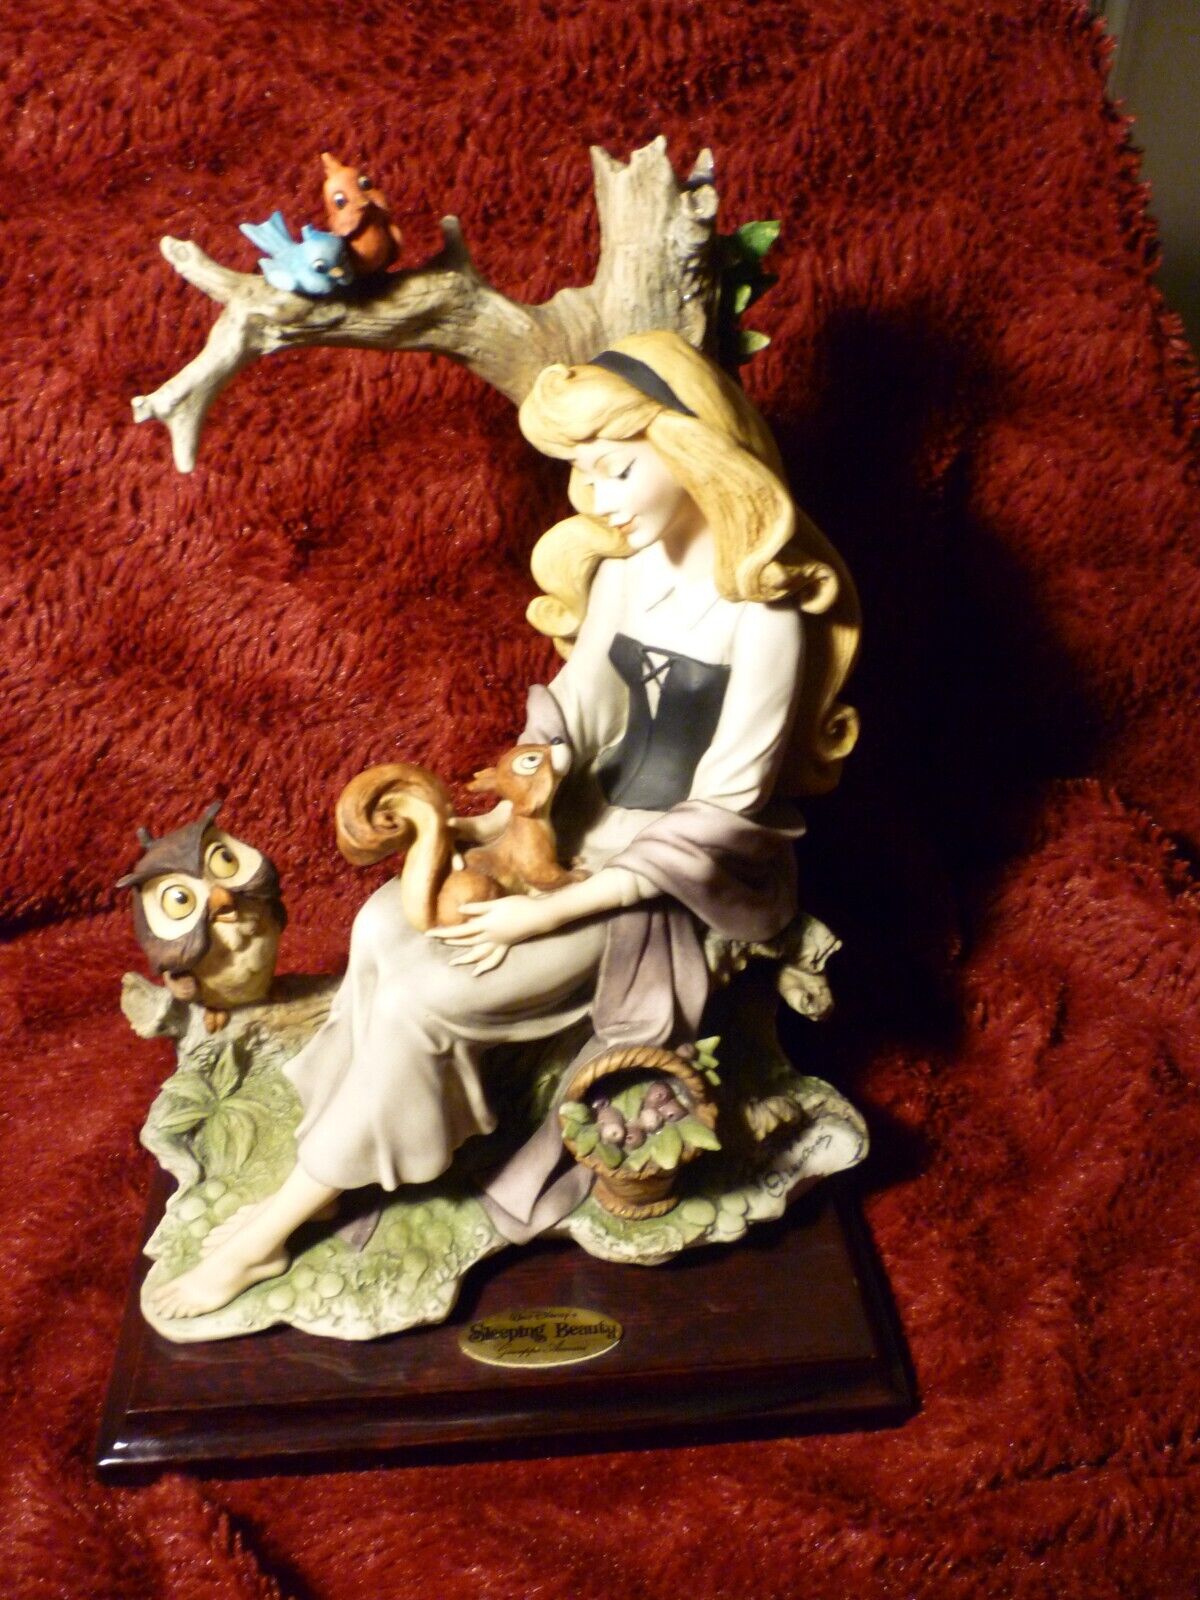 Giuseppe Armani figurines, Sleeping Beauty, excellent, average sale p $2600